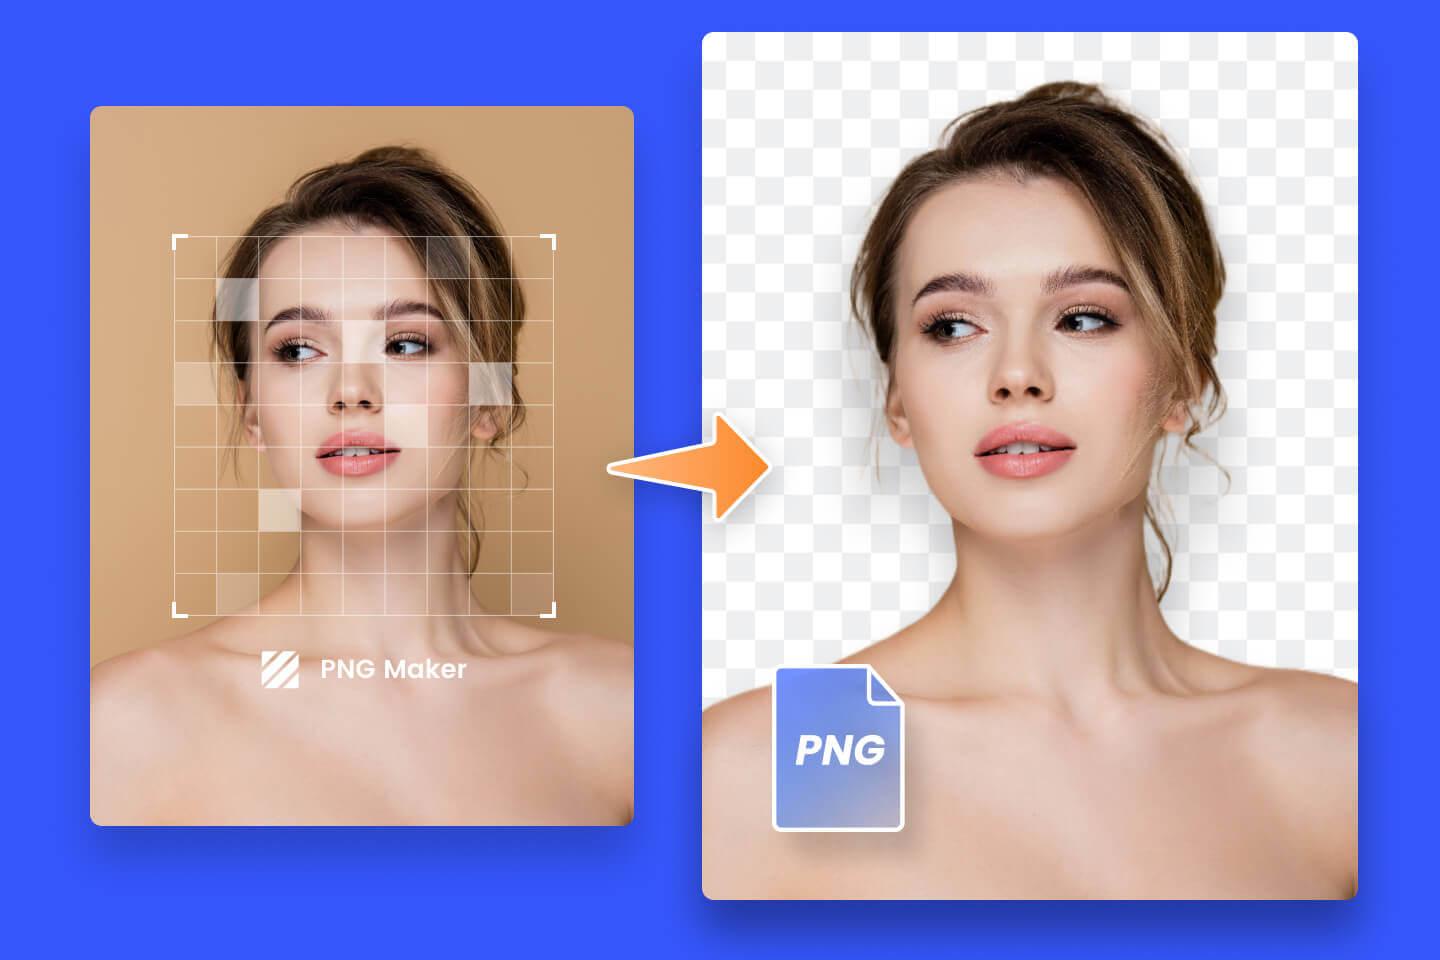 Free PNG Maker: Make Transparent PNG & Convert Image to PNG